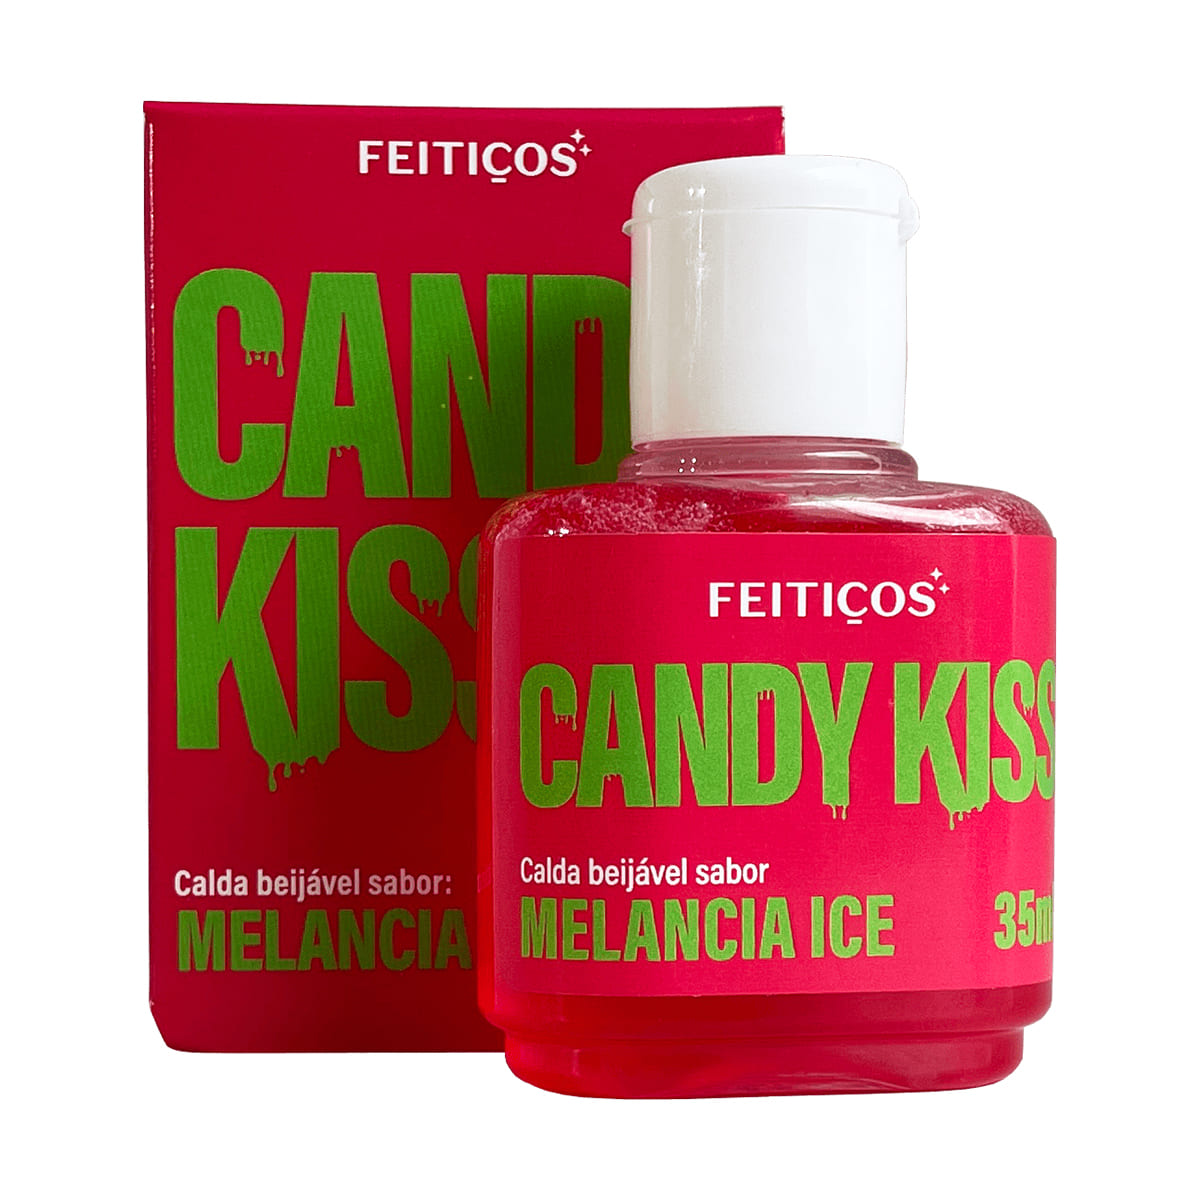 Candy Kiss - Melancia Ice - 35ml